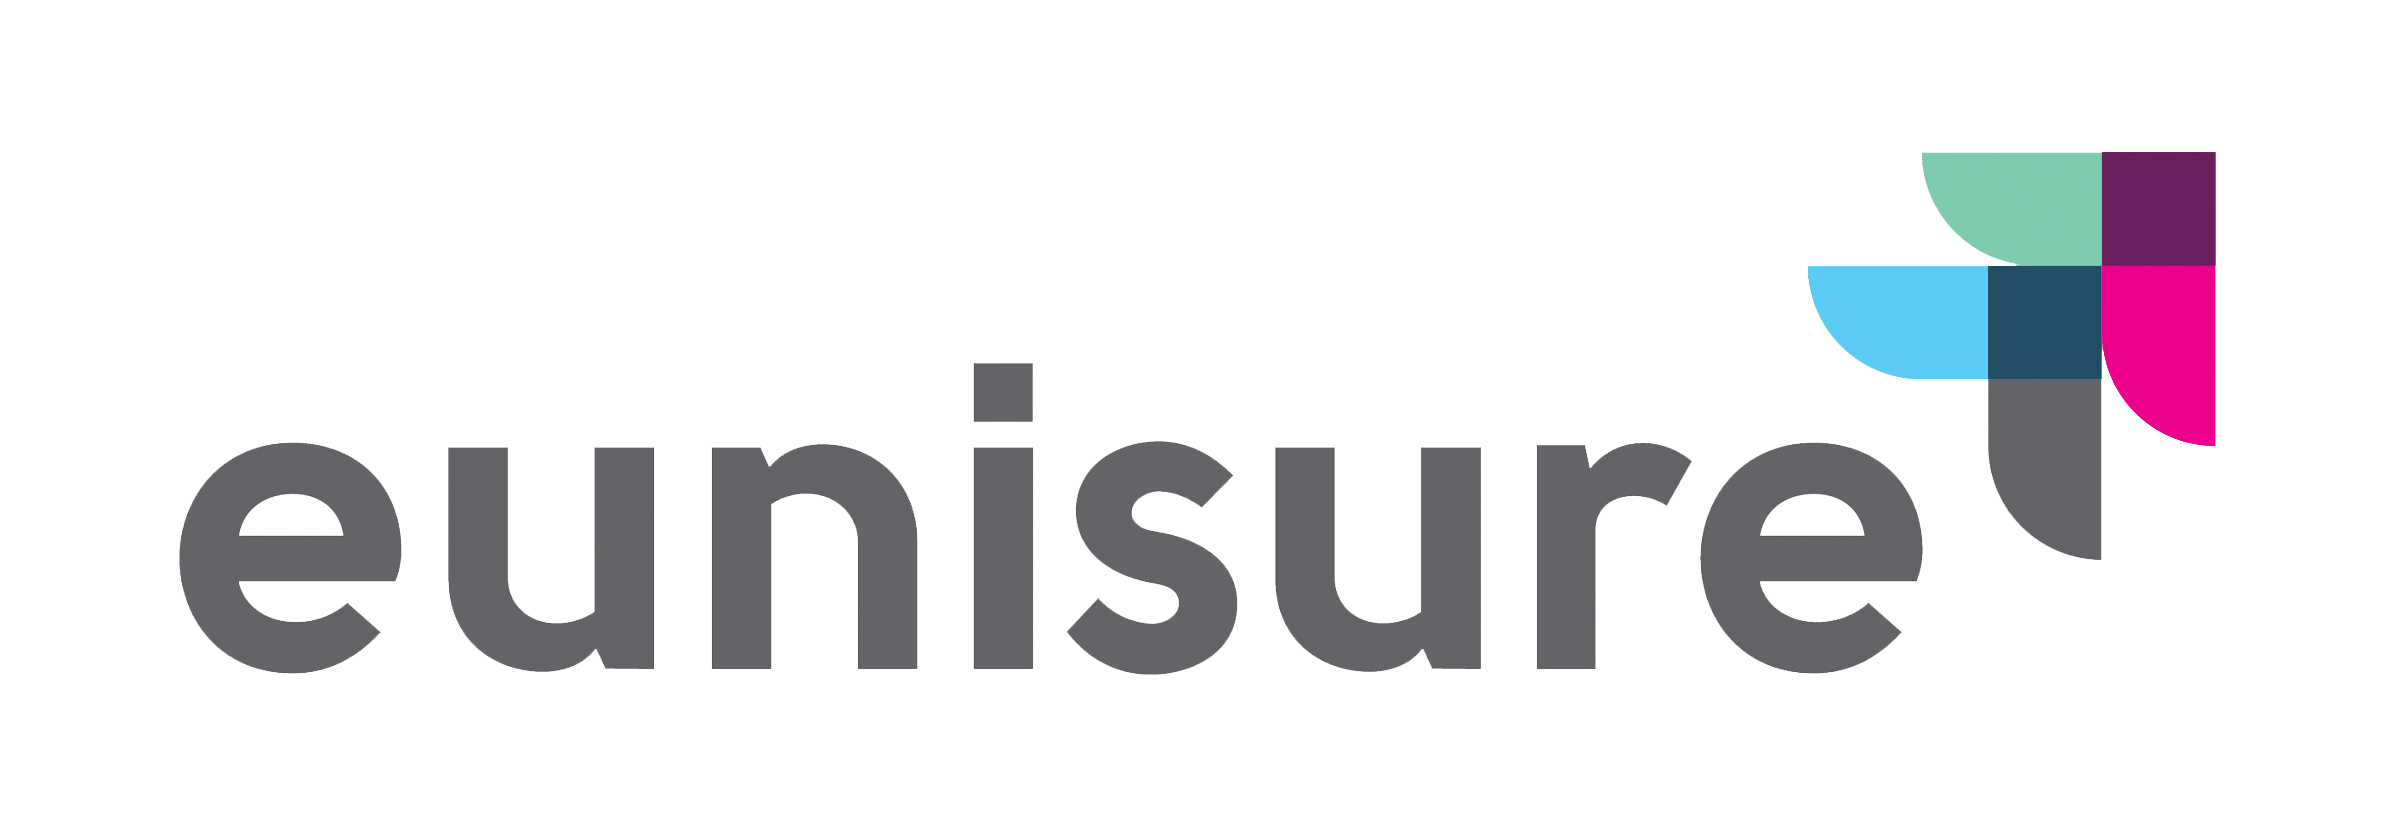 eunisure logo